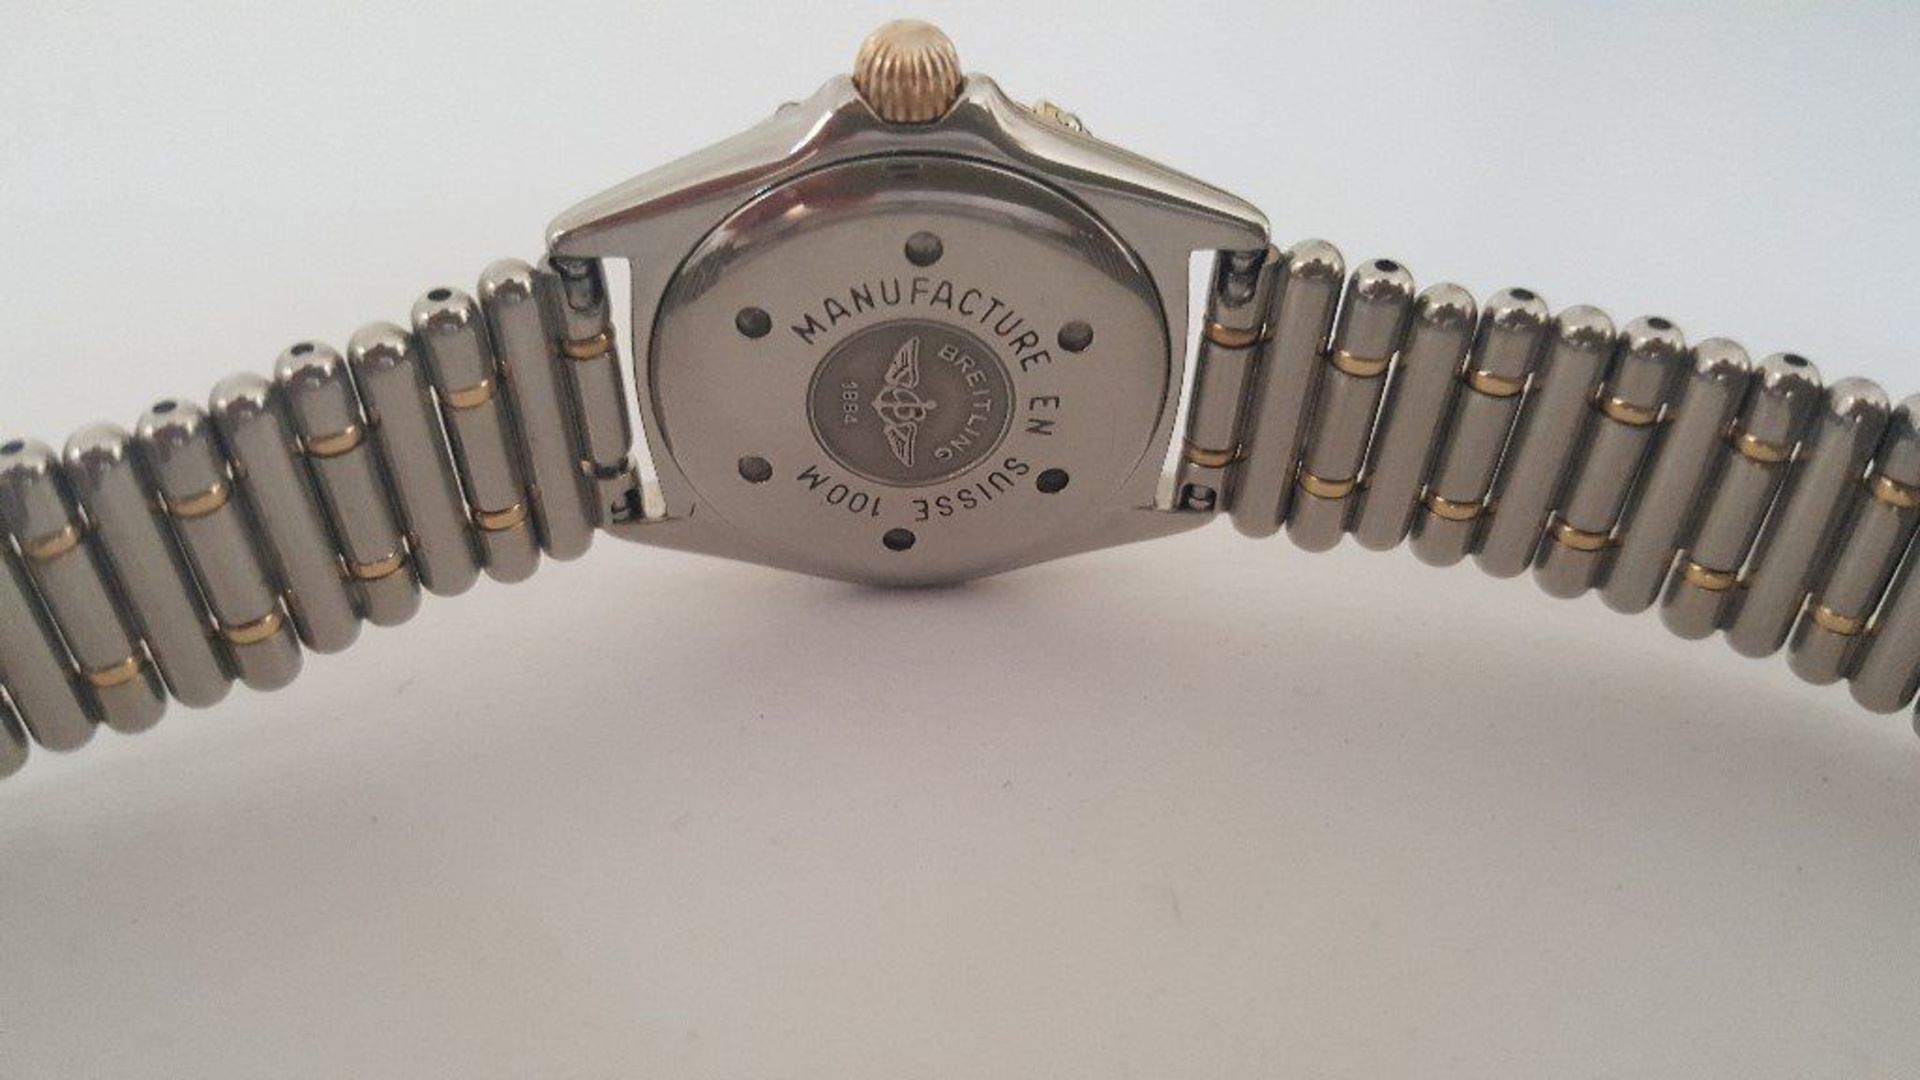 Breitling Callistino Ladies Quartz Blue Dial Watch 18CT Gold Trimmings Model No: B52045 - Image 3 of 6